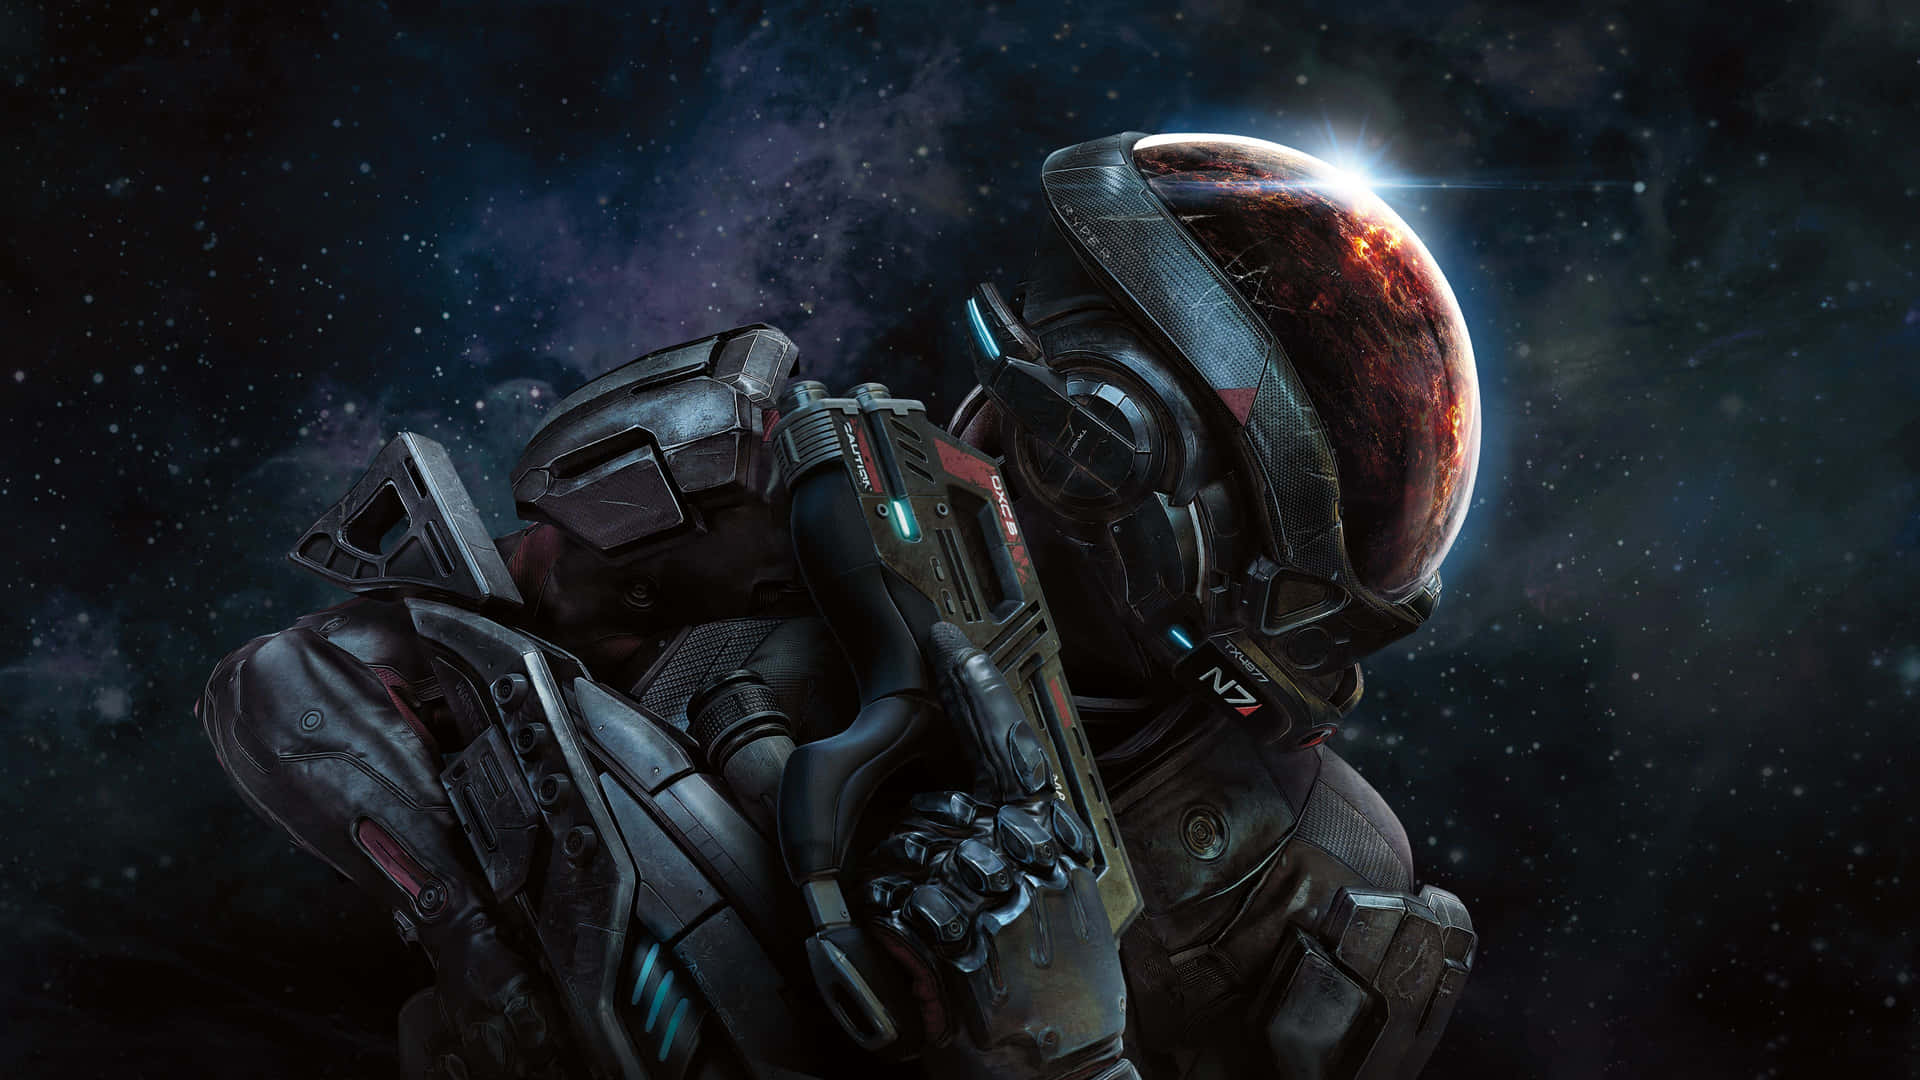 Juego En Ultra Hd 4k De Mass Effect Andromeda. Fondo de pantalla